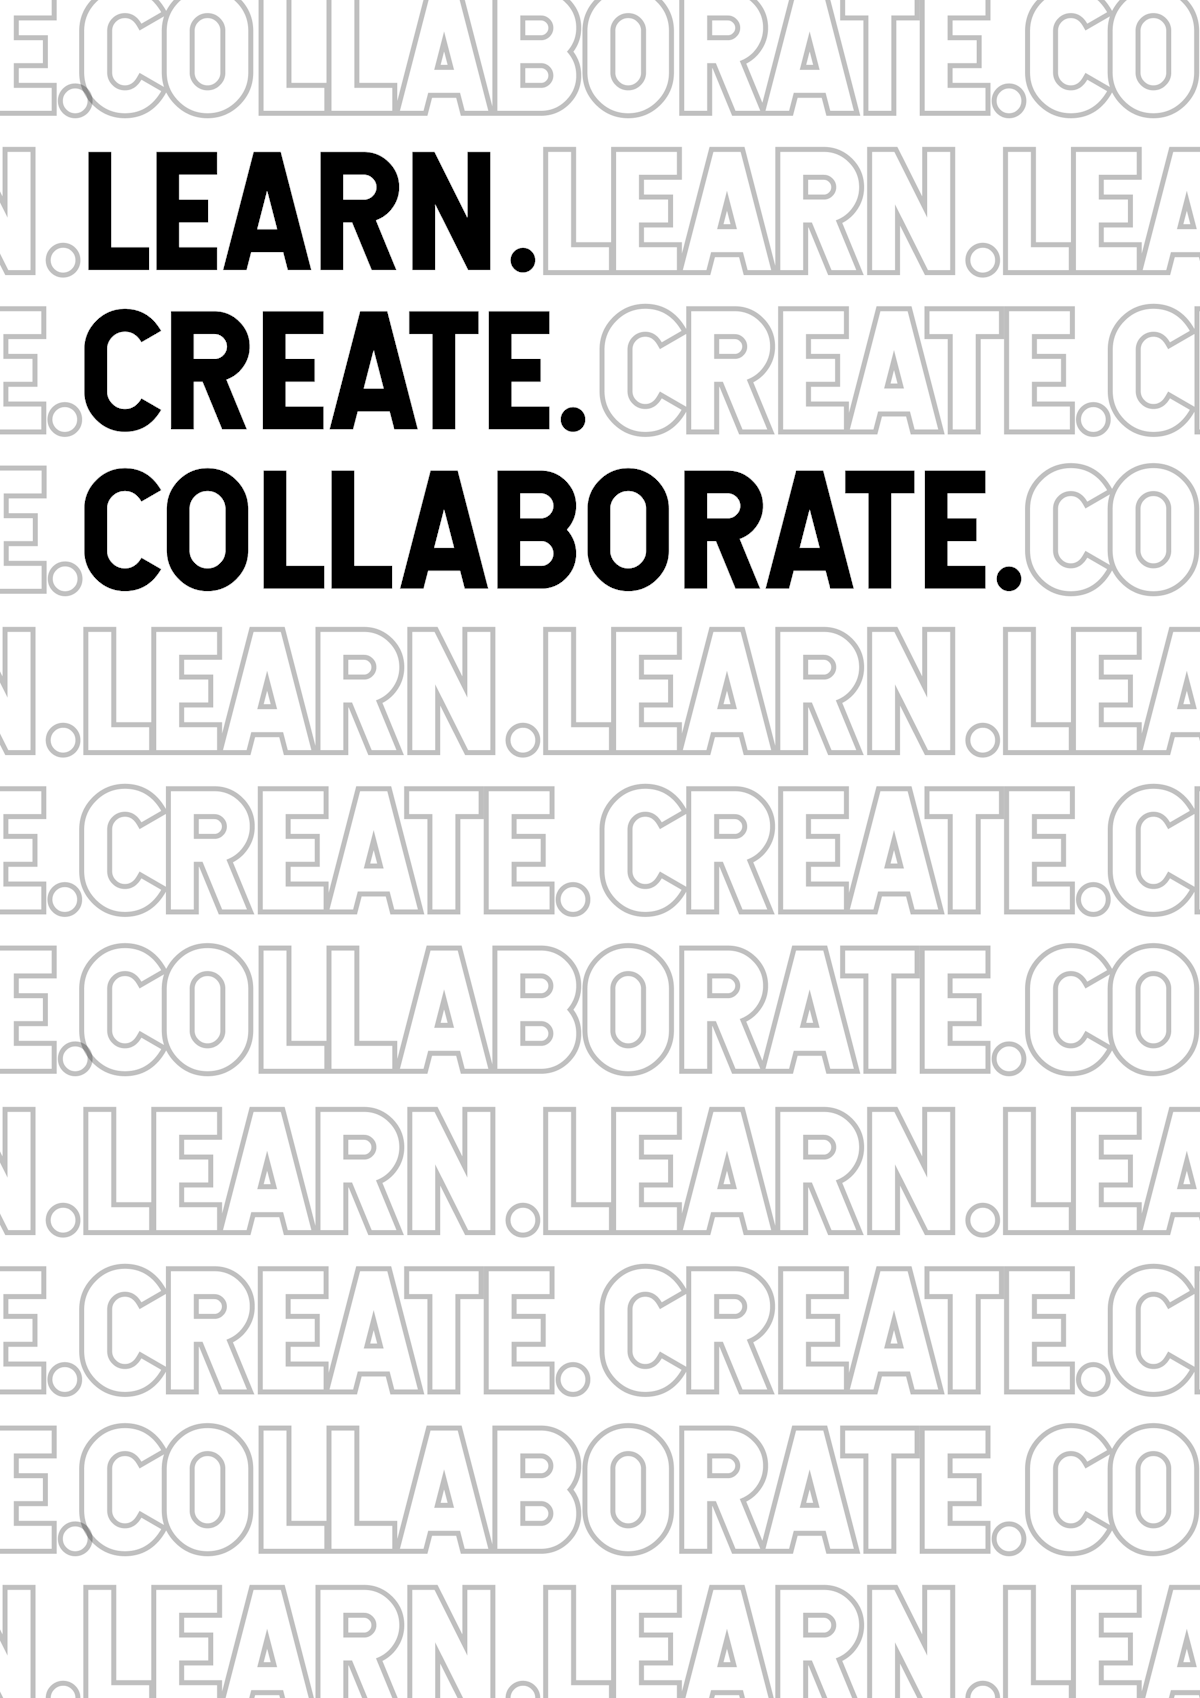 Learn.Create.Collaborate.